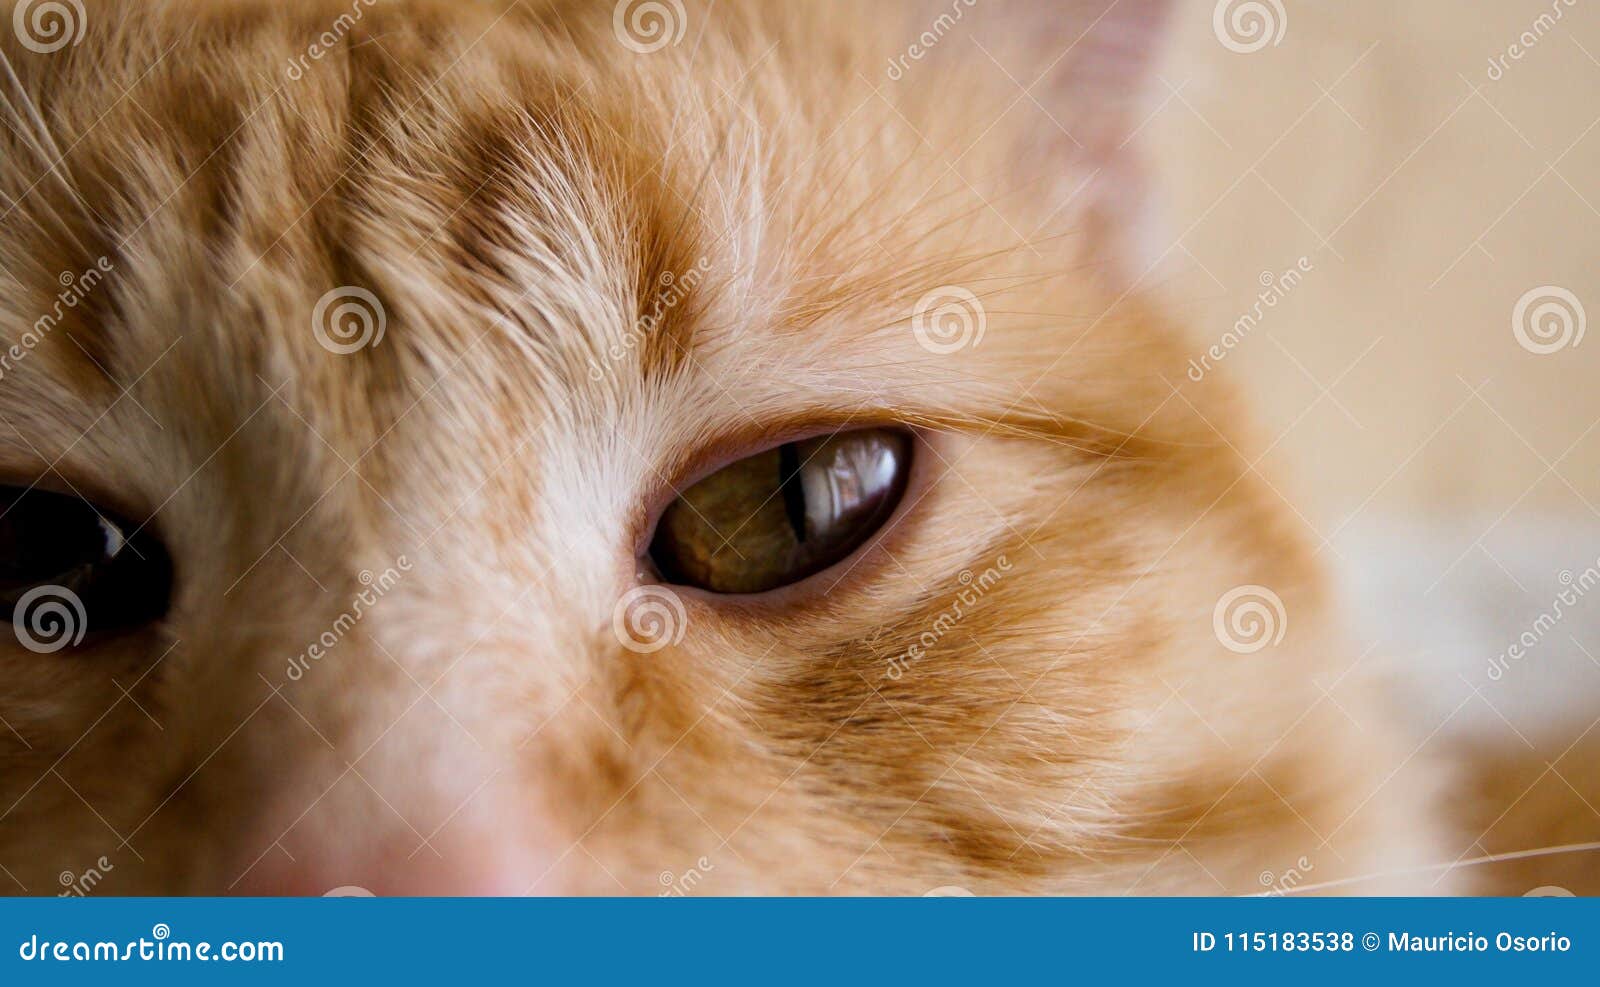 cat eyes closeup gato